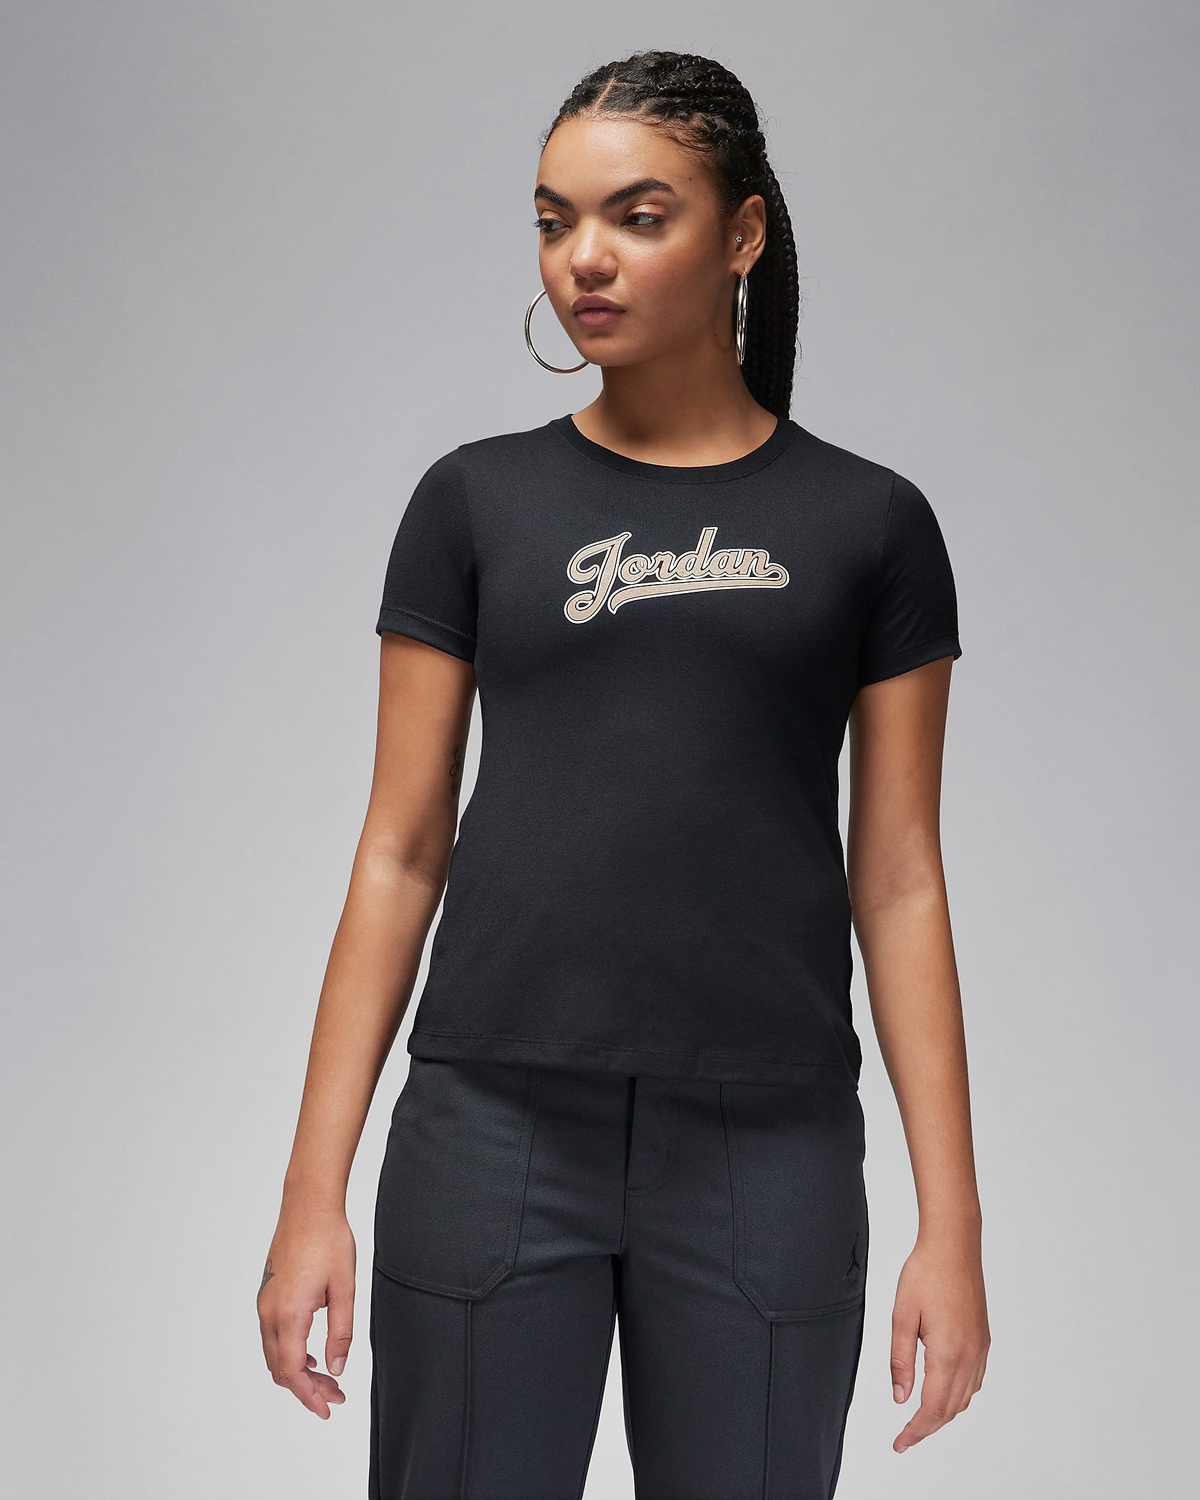 Jordan-Womens-Slim-T-Shirt-Black-Legend-Medium-Brown-1